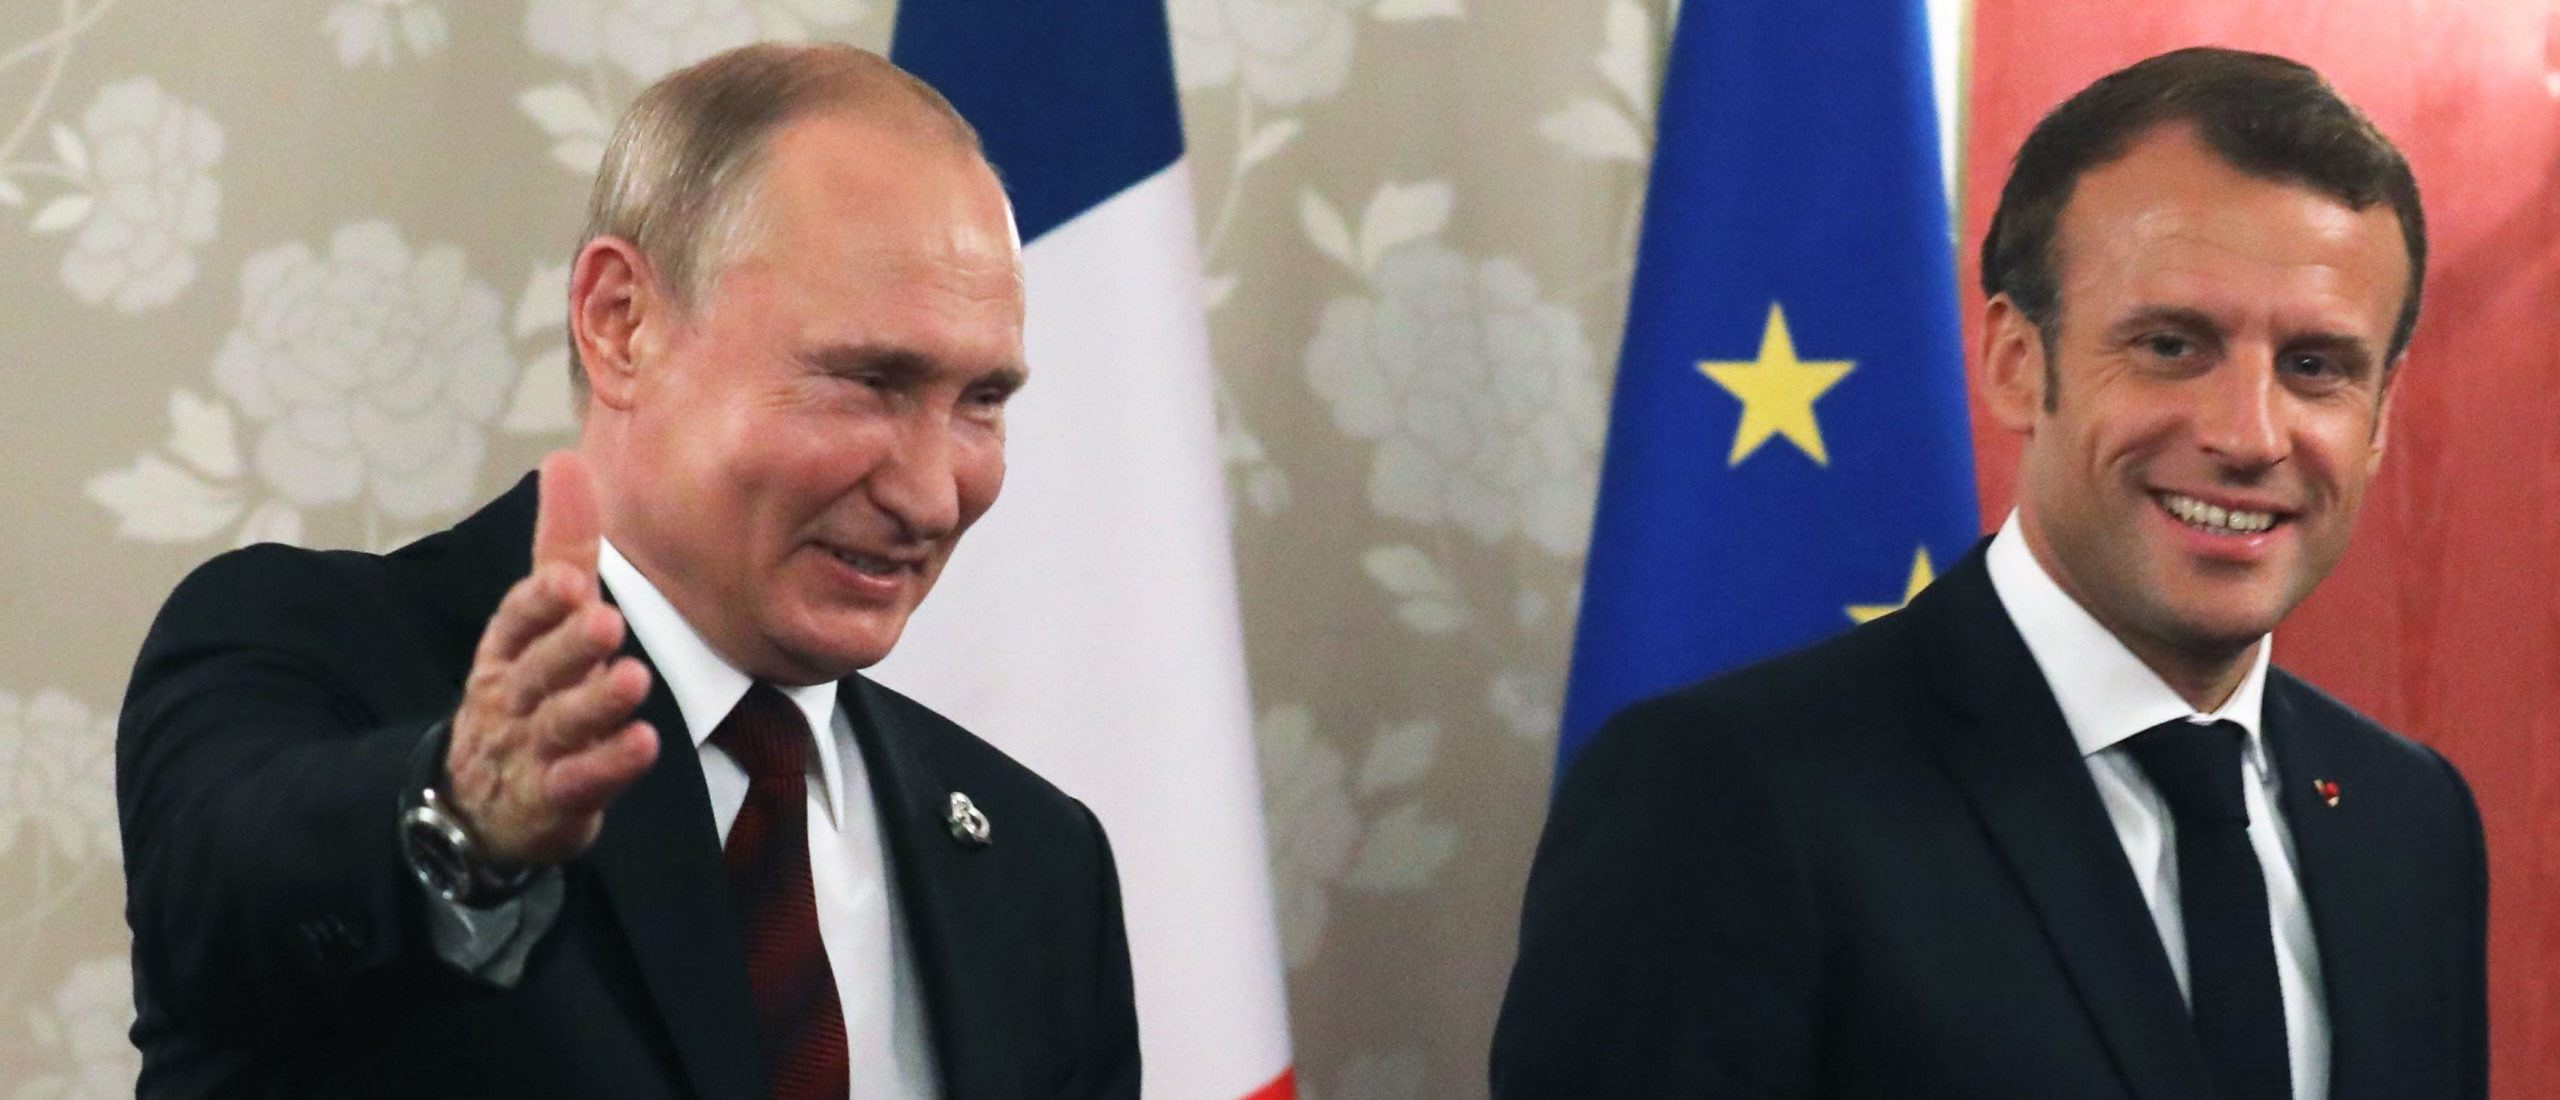 Macron Meets With Putin In An Attempt To Avert War